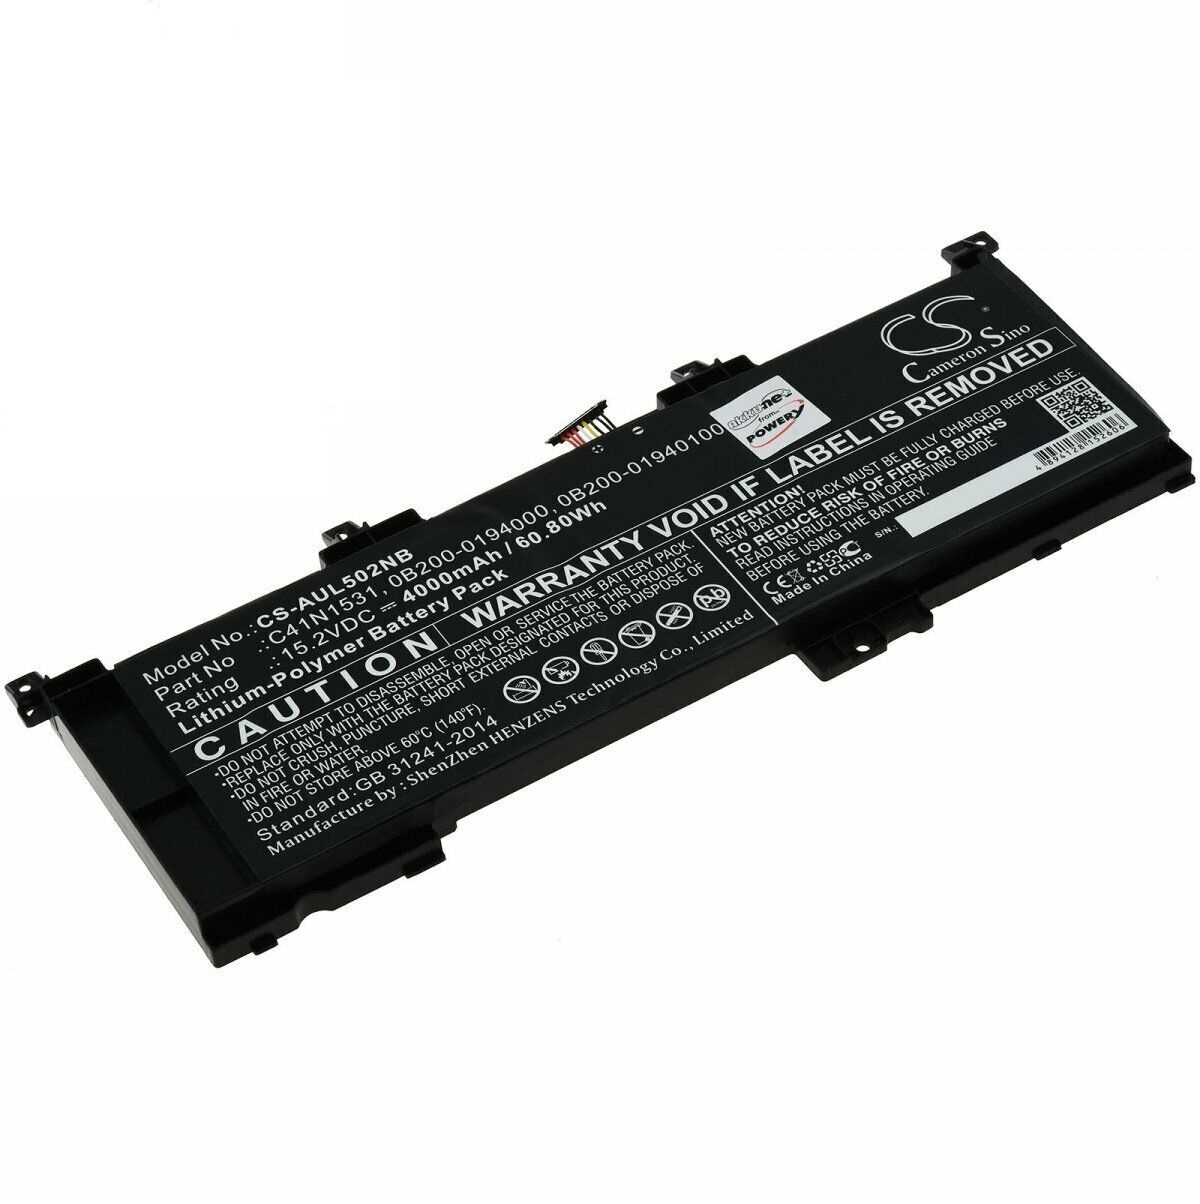 Bateria para Asus GL502VY-DS71 GL502VY-DS74 Rog GL502VS GL502VT Rog Strix GL502VS C41N1531 0B200-01940100